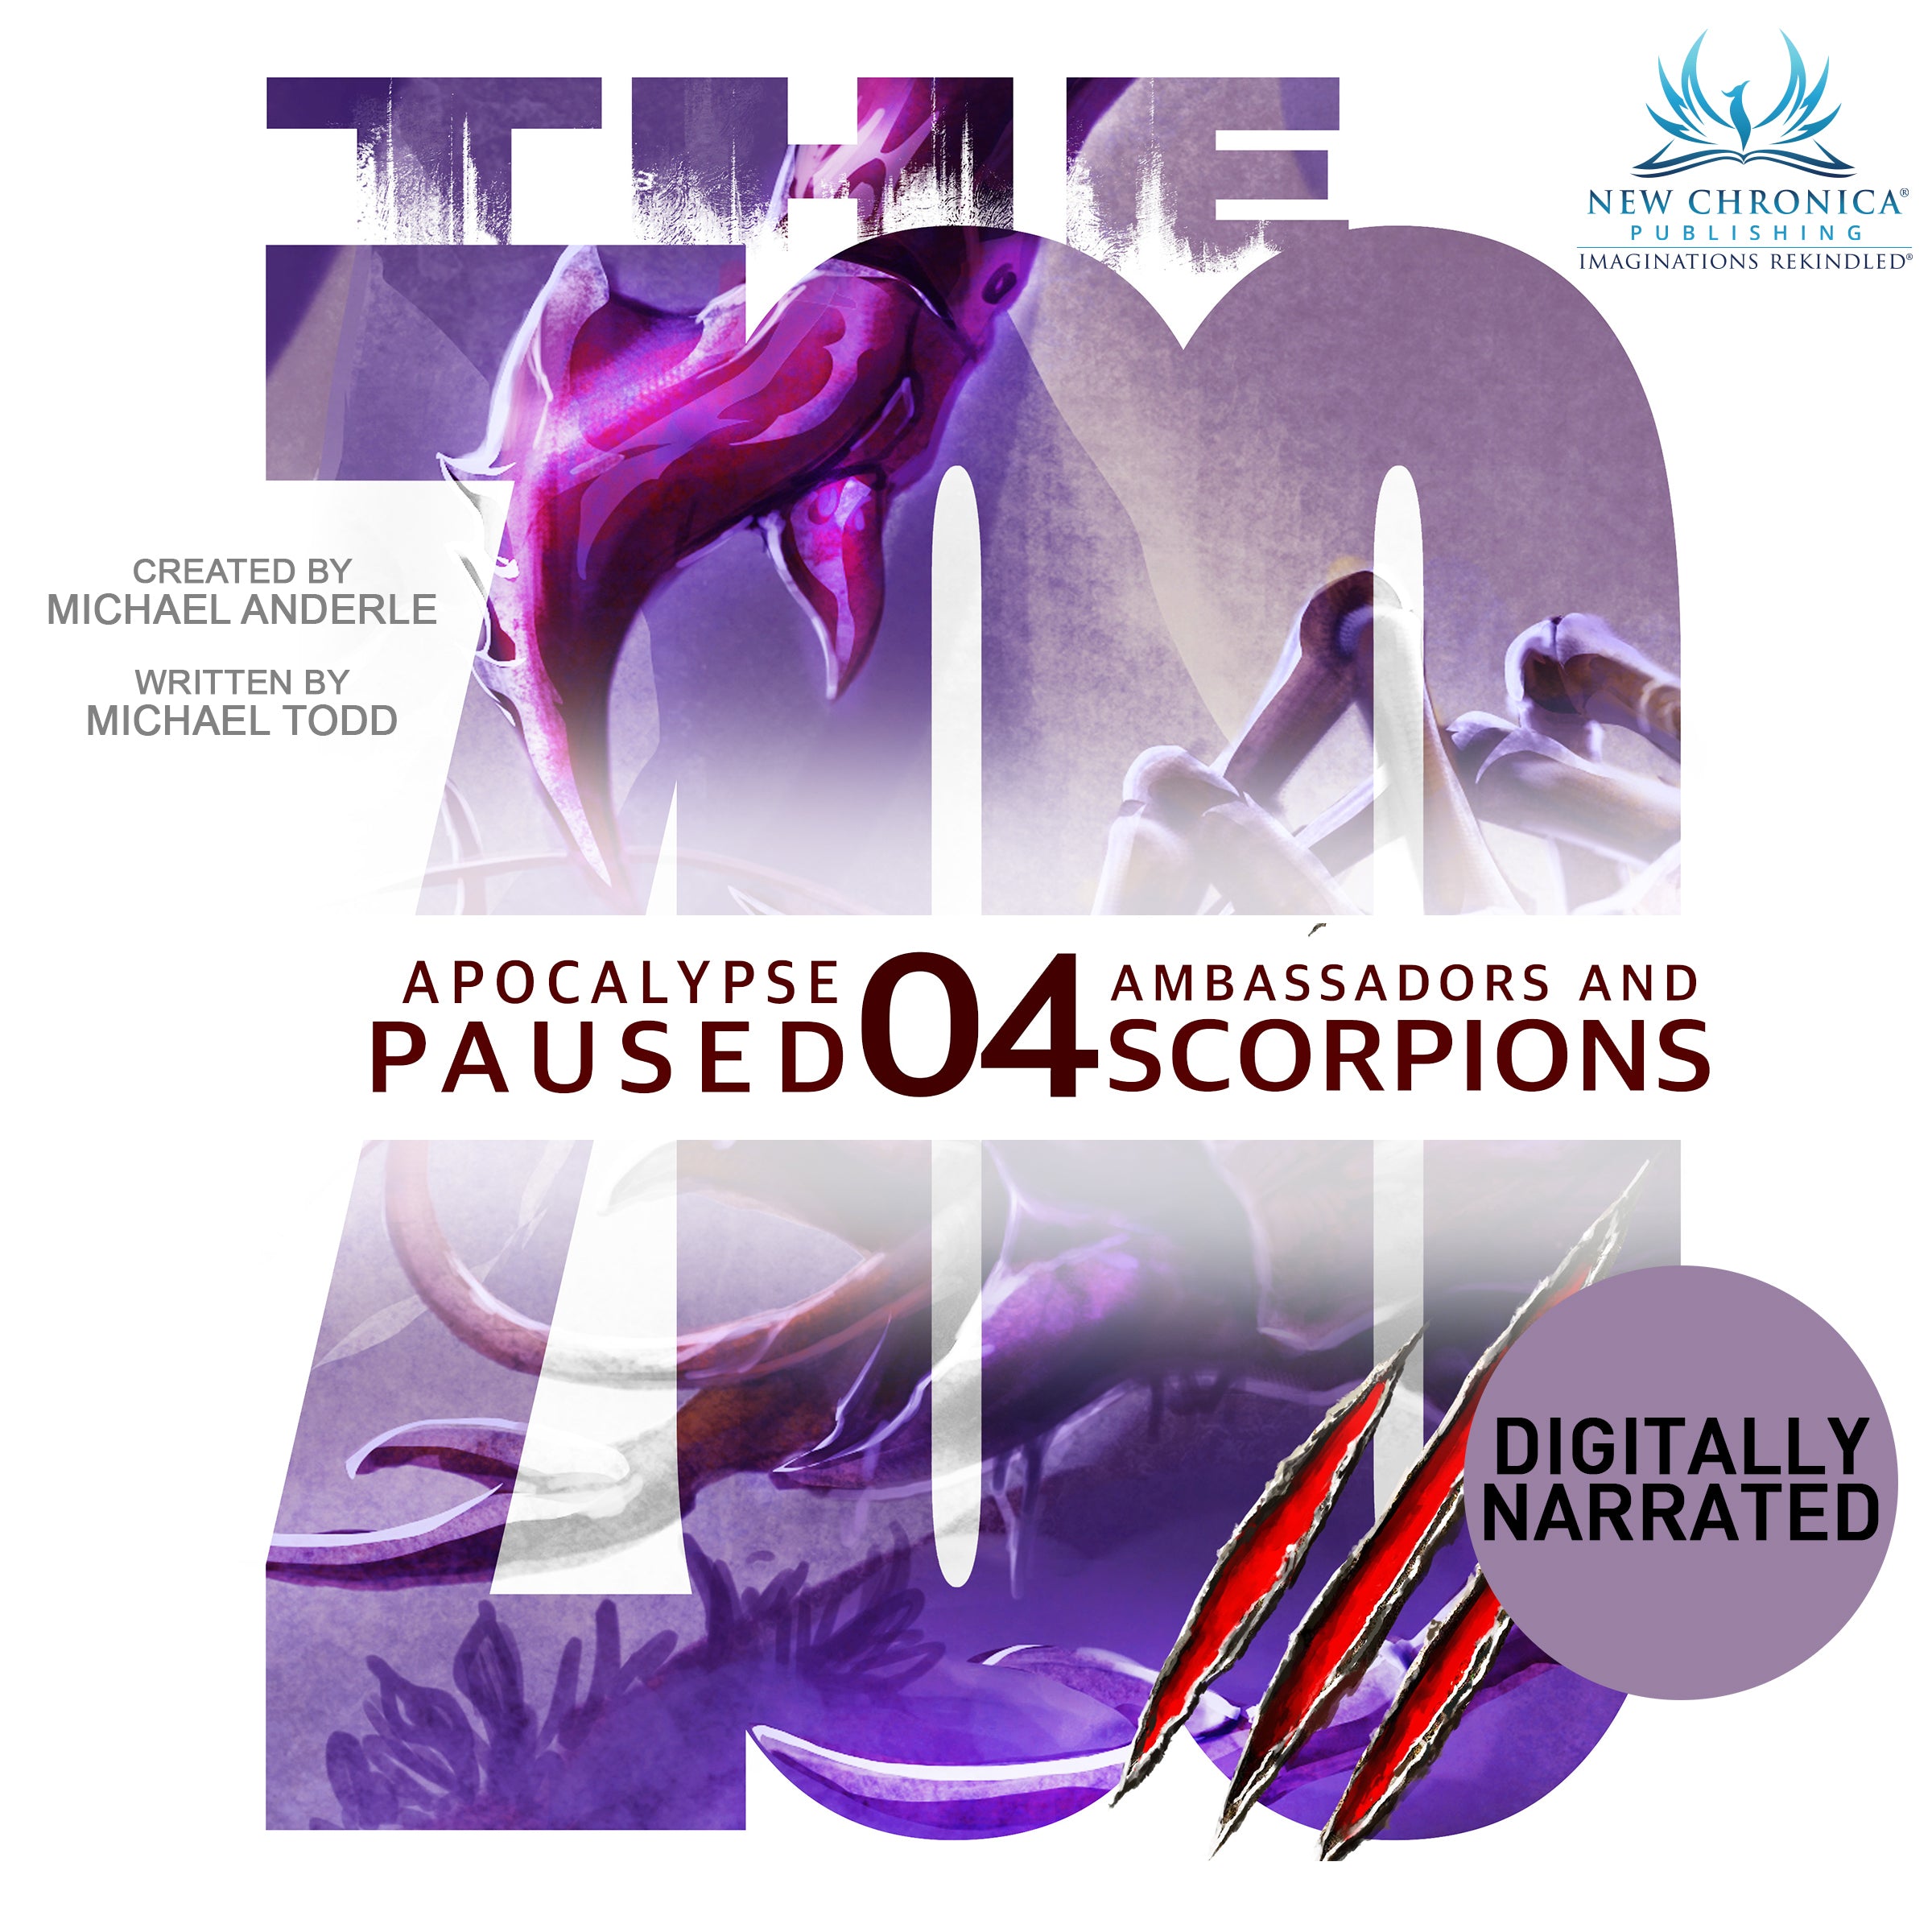 Book 4: Ambassadors and Scorpions Audiobook